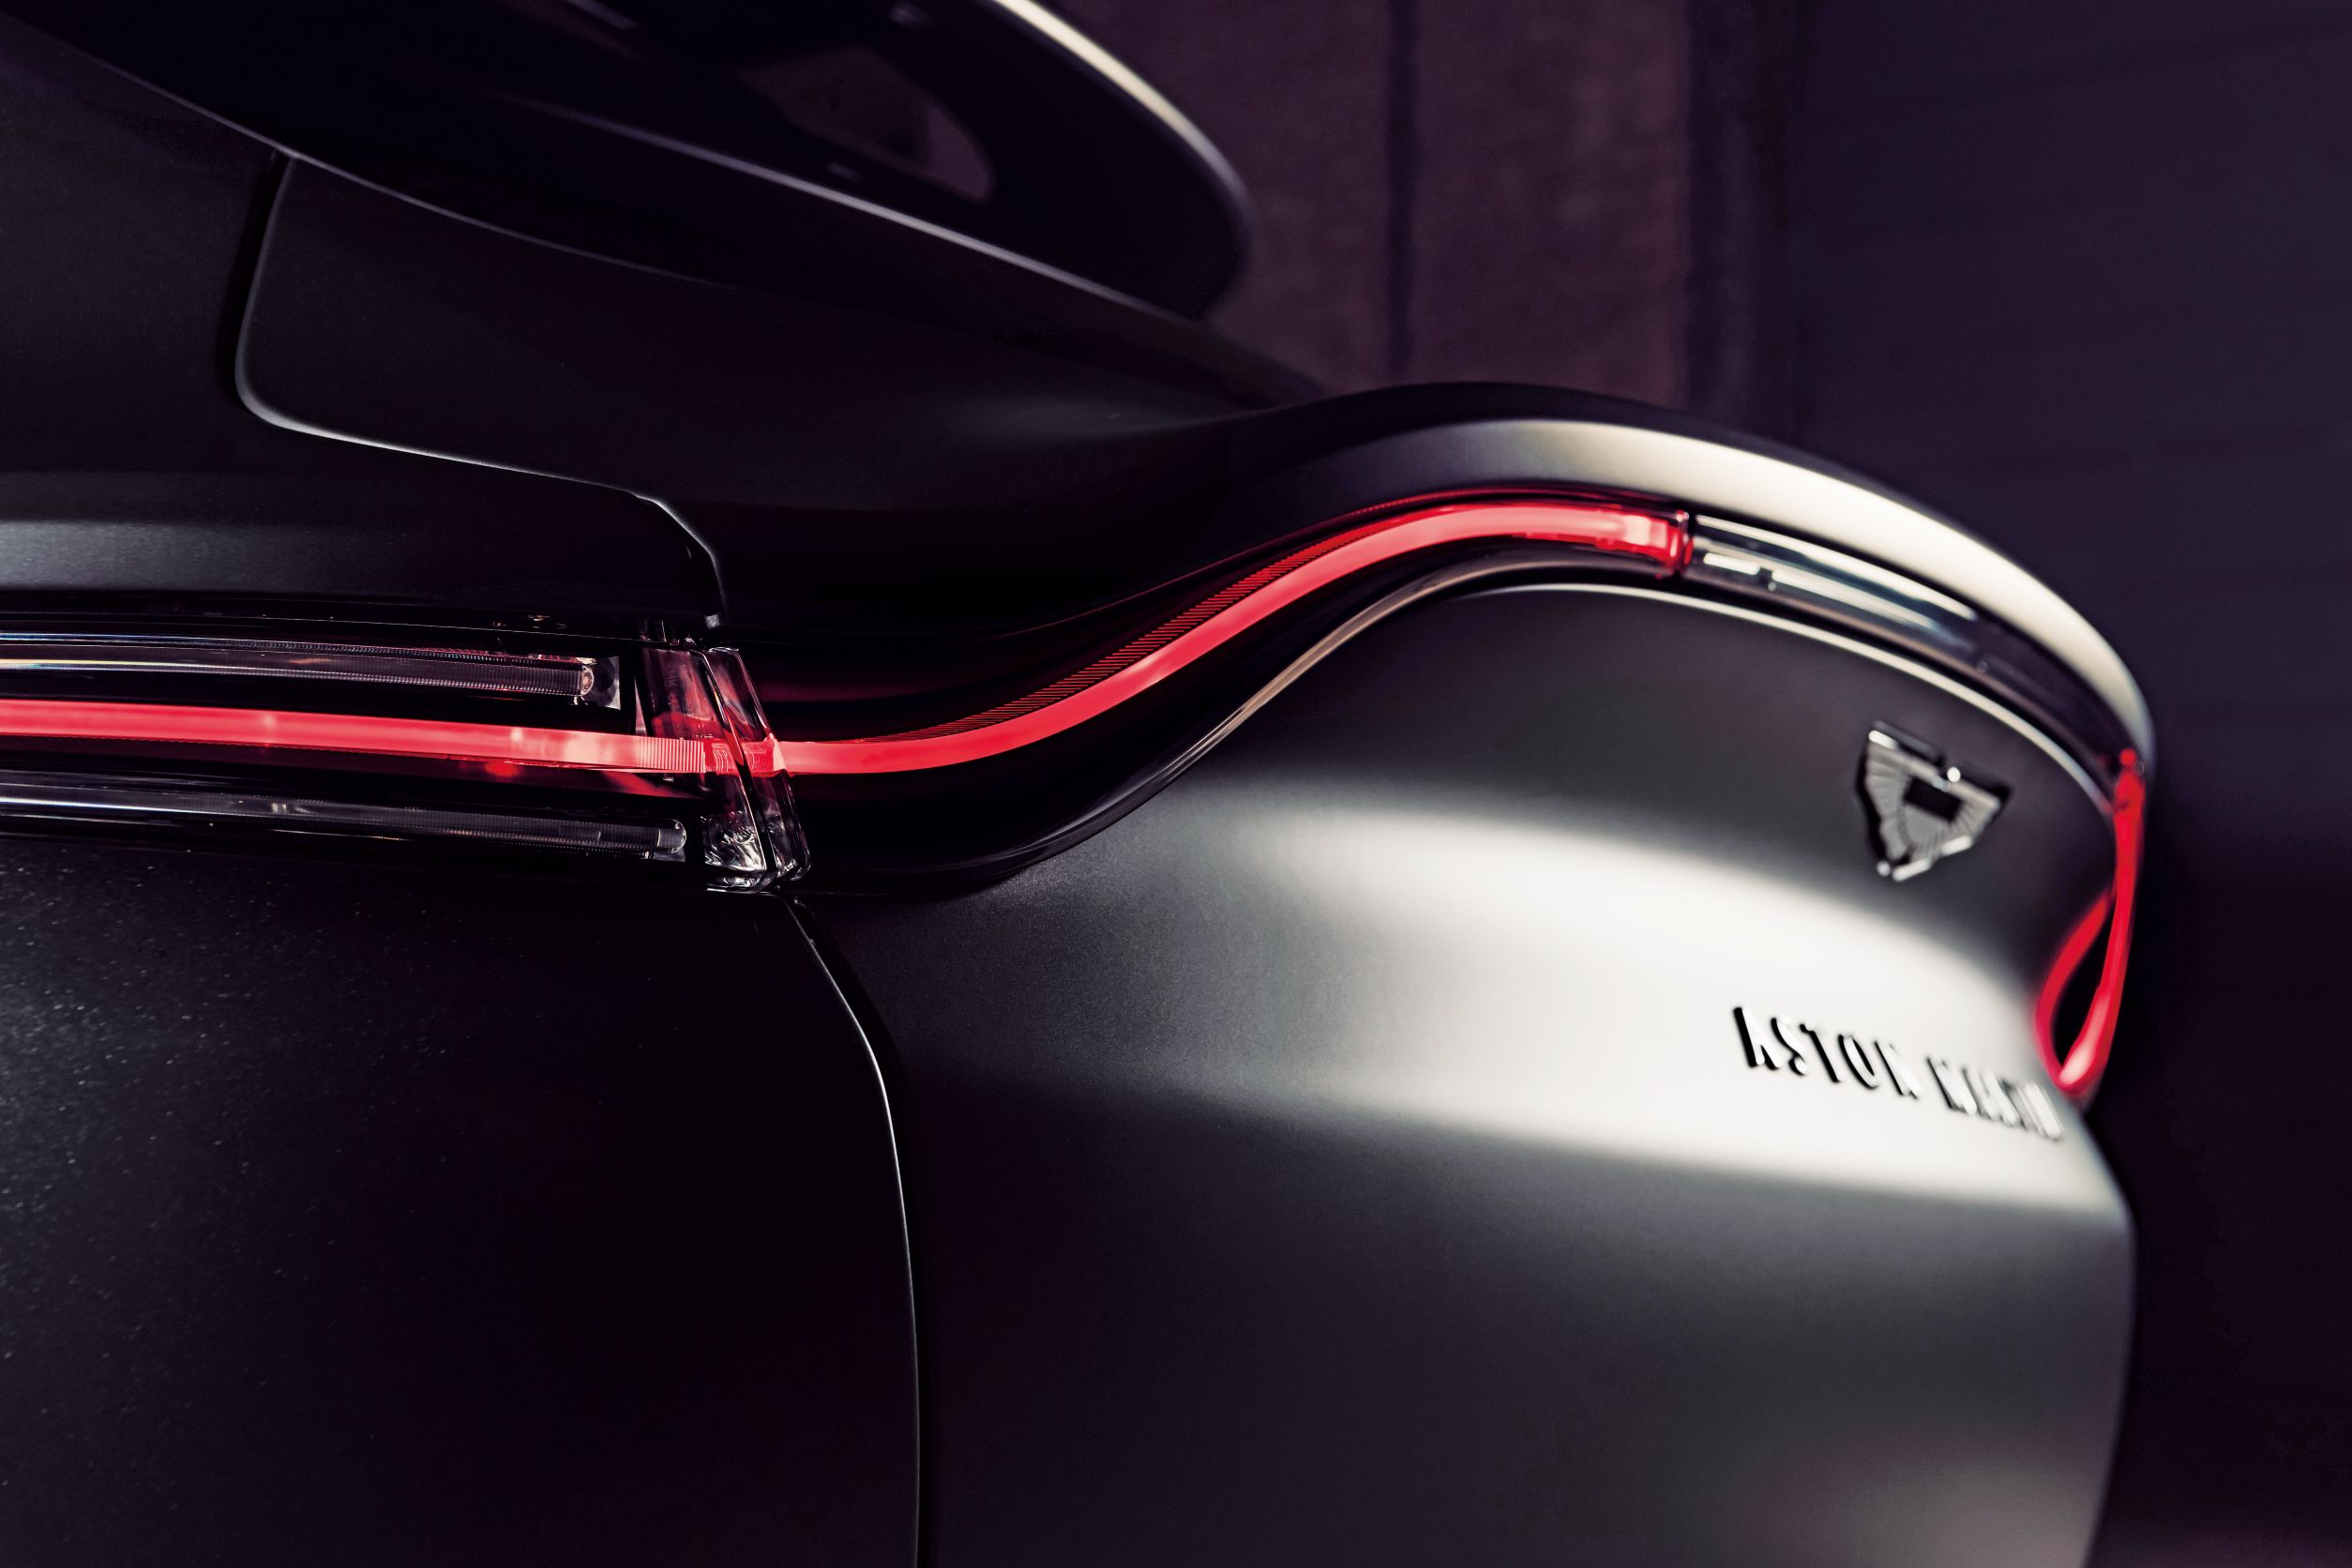 Aston Martin DBX 沿著小鴨尾翼設計的尾燈，風格獨具，夜間背影絕不會被錯認。